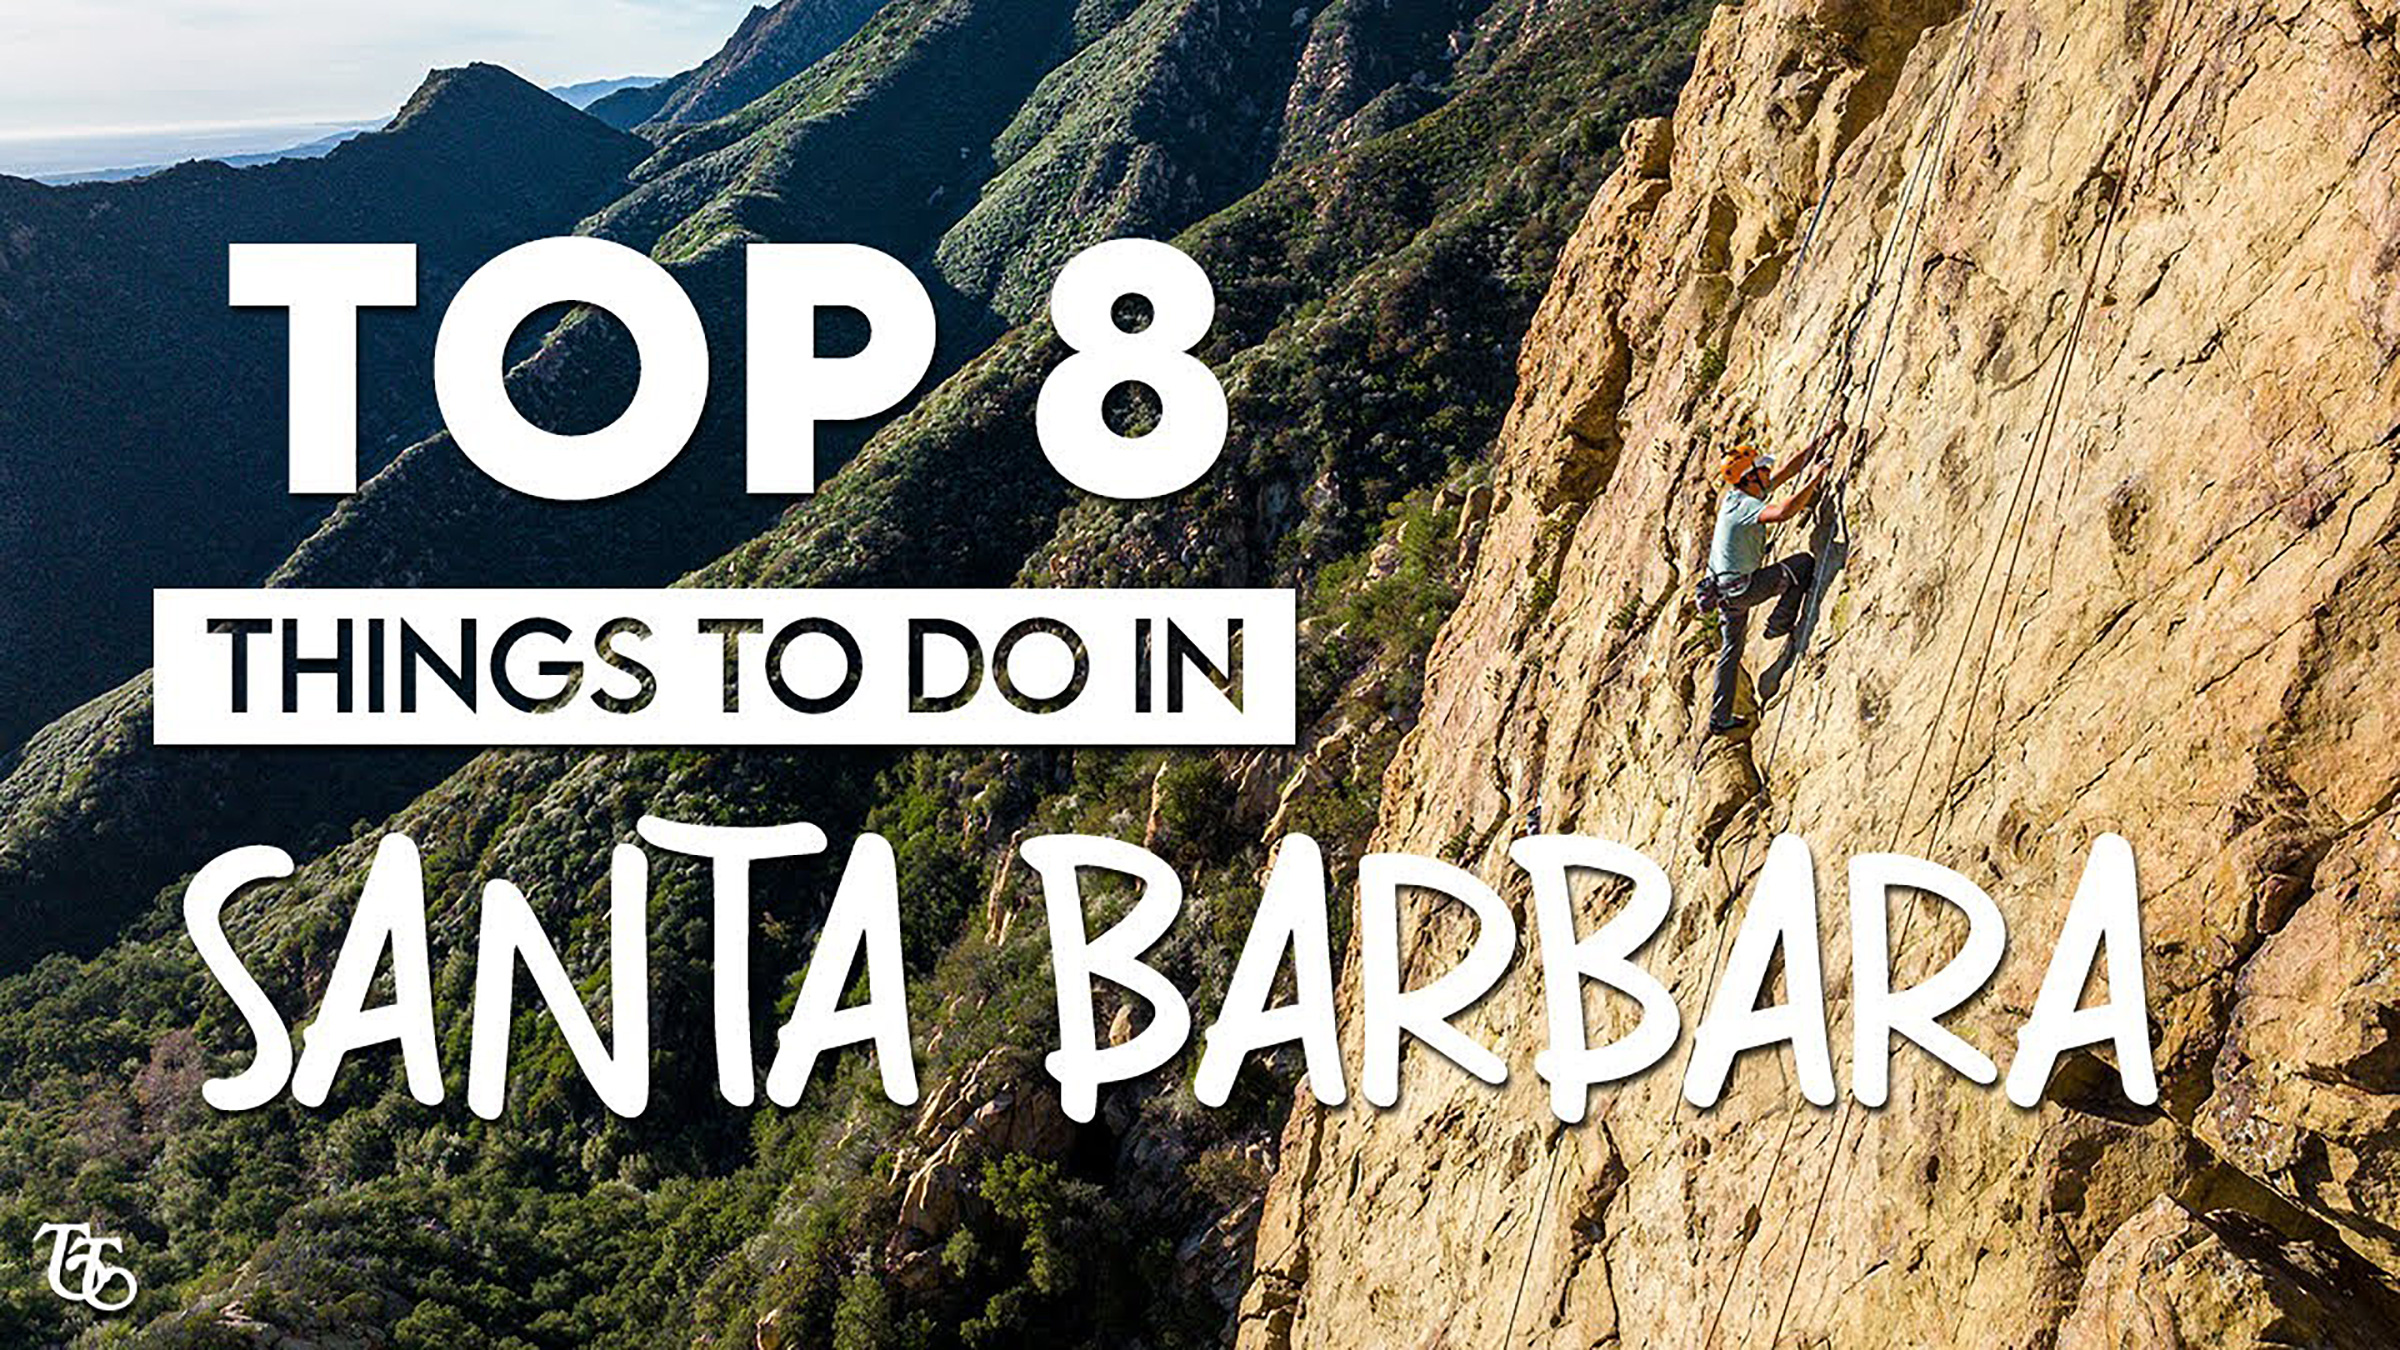 Top 8 Things to do in Santa Barbara